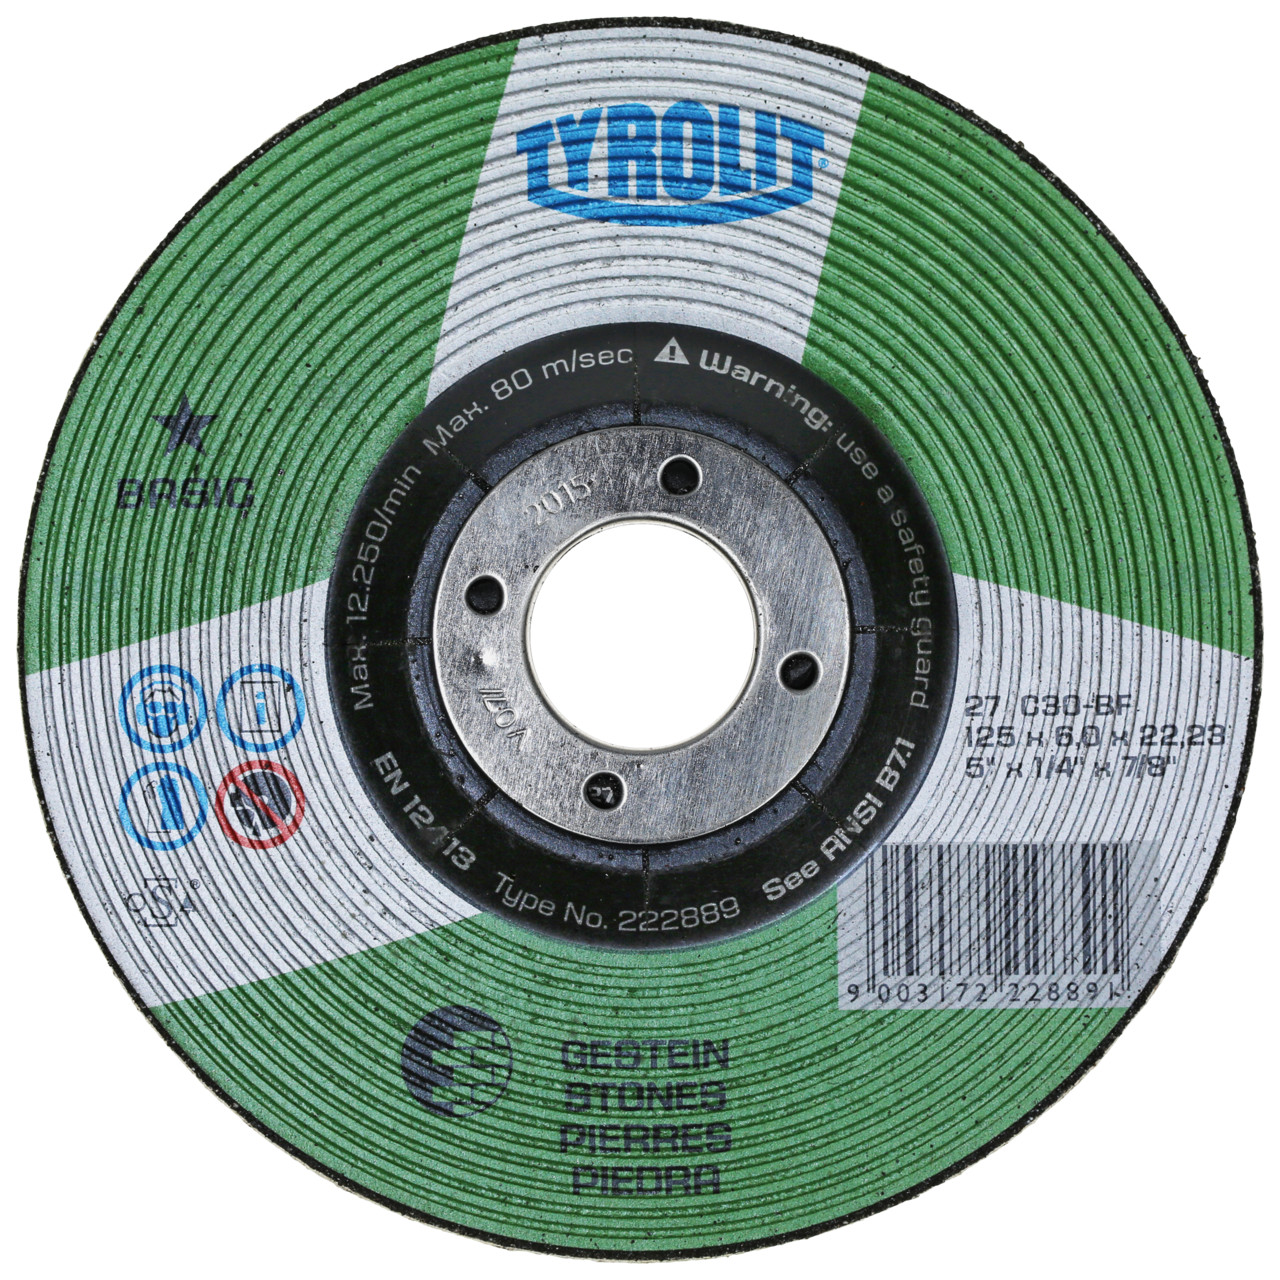 TYROLIT grinding wheel DxUxH 230x6x22.23 For stone, shape: 27 - offset version, Art. 222898